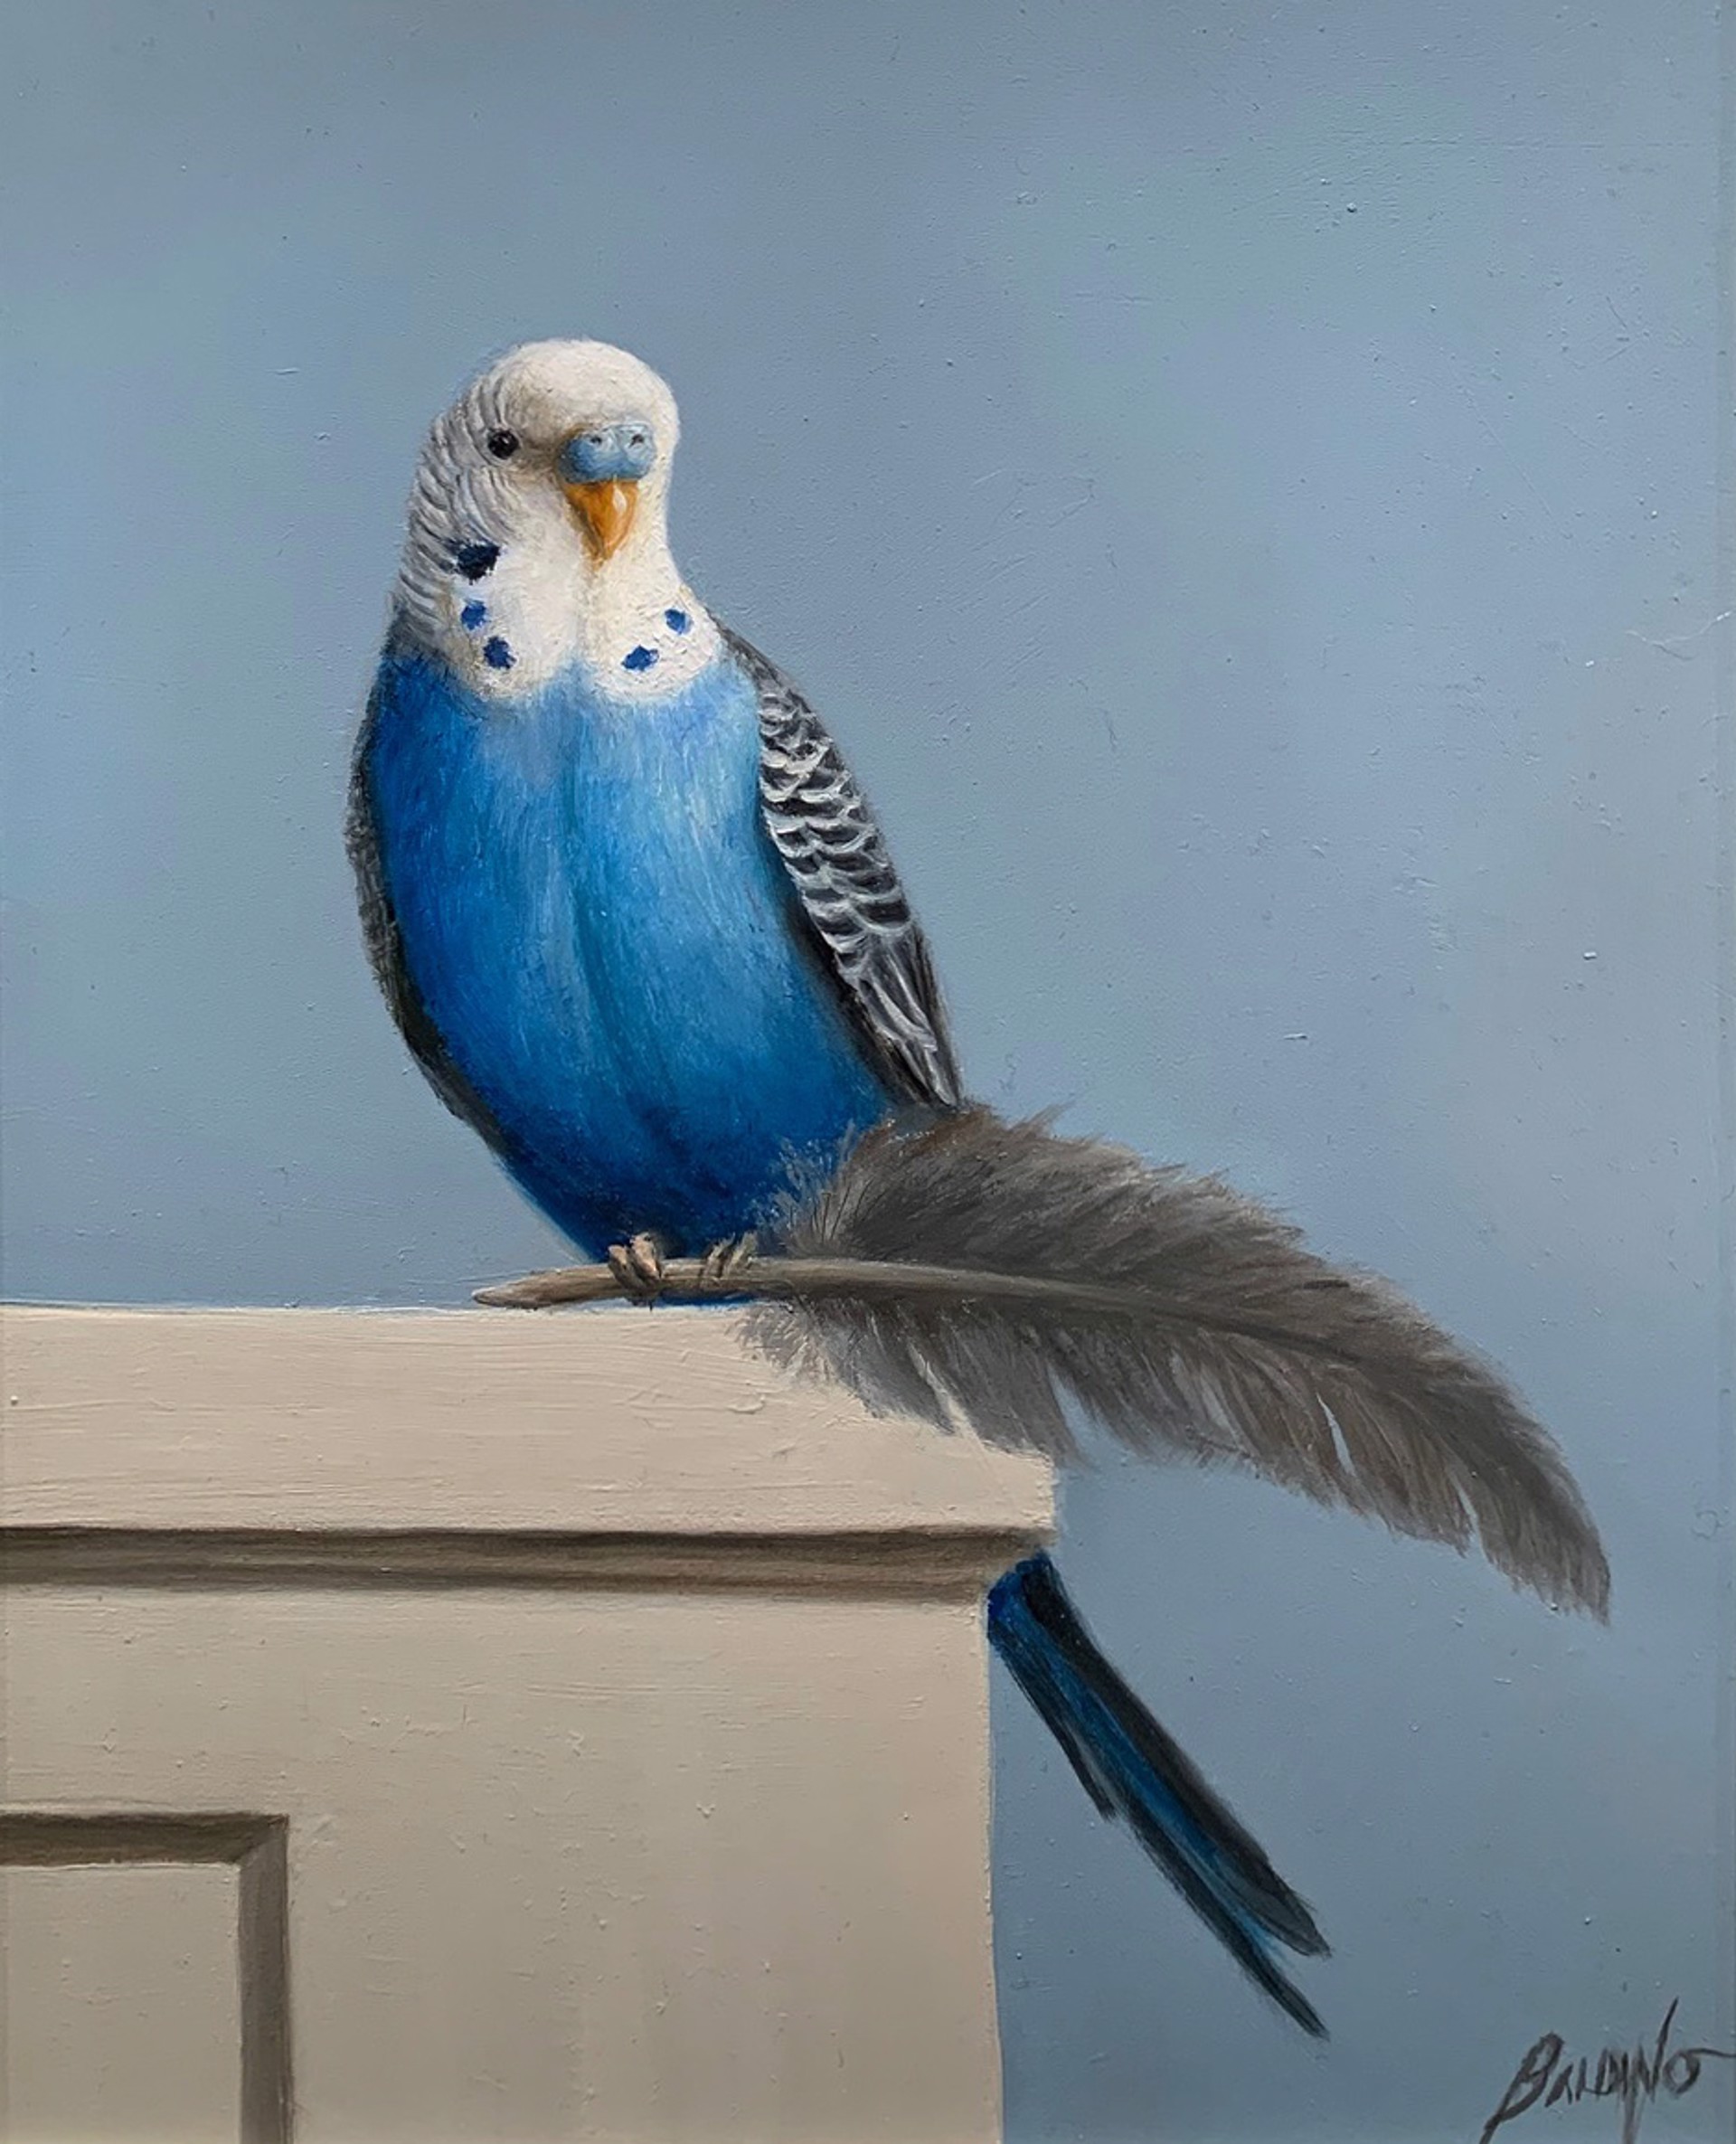 Birds of a Feather by Patt Baldino